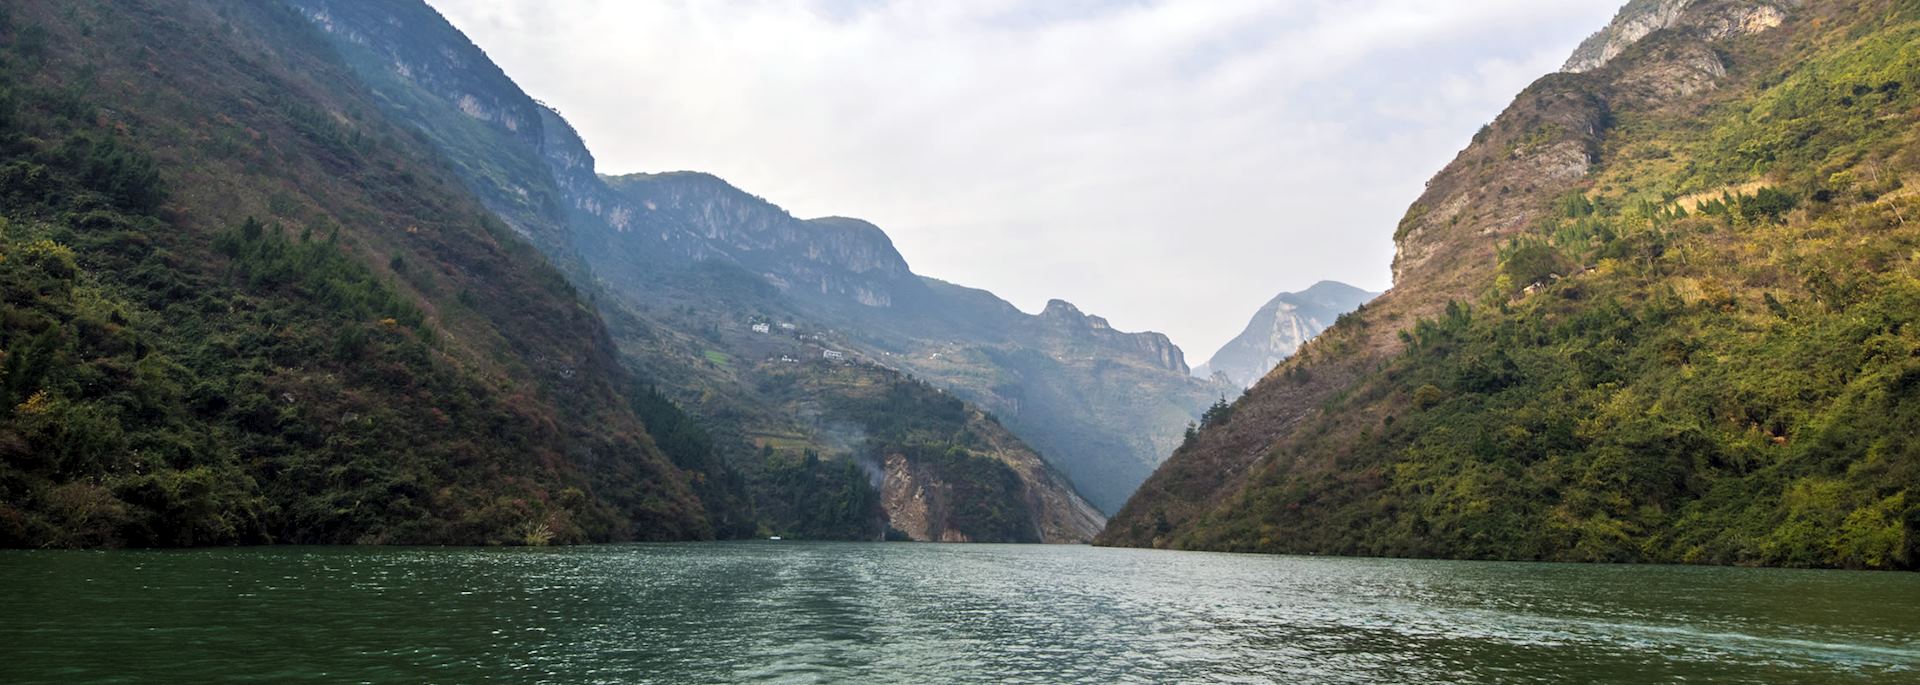 Wu Gorge on the Yangtze River